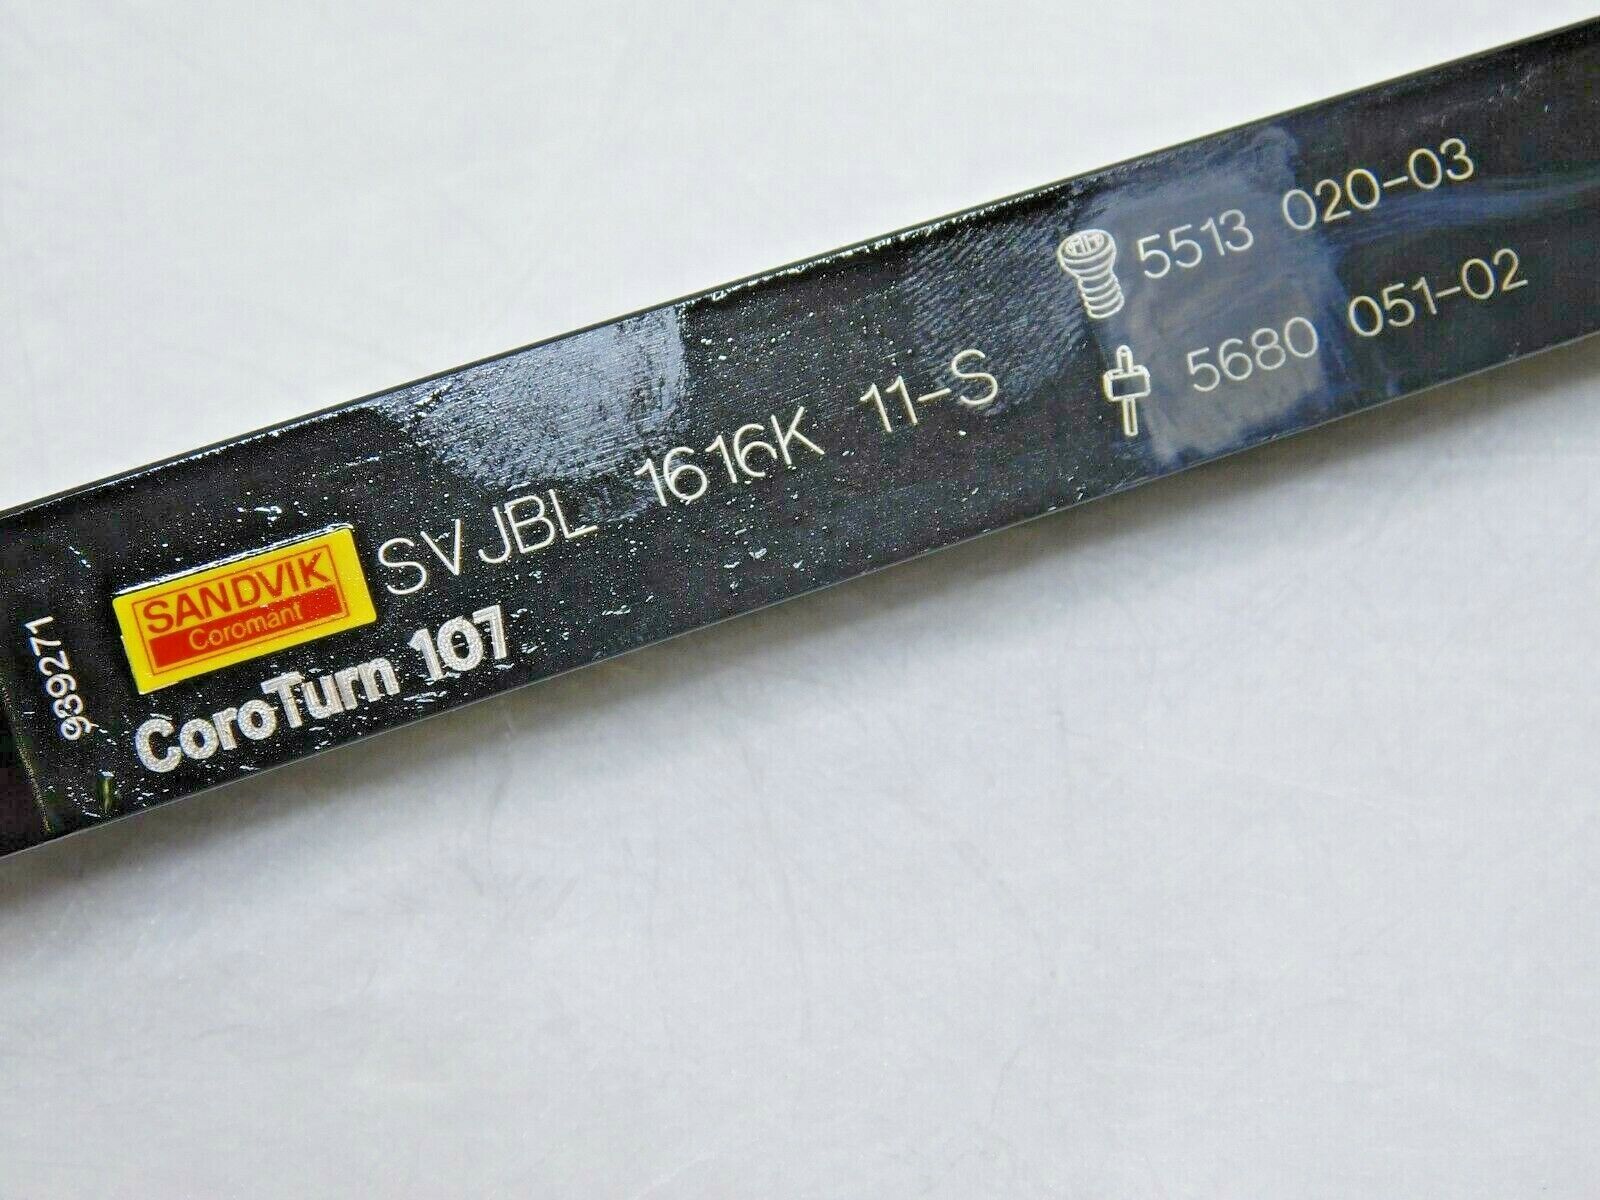 Sandvik Coromant Indexable Turning Toolholder Svjbl 1616K 11-S 5752213  Industryrecycles